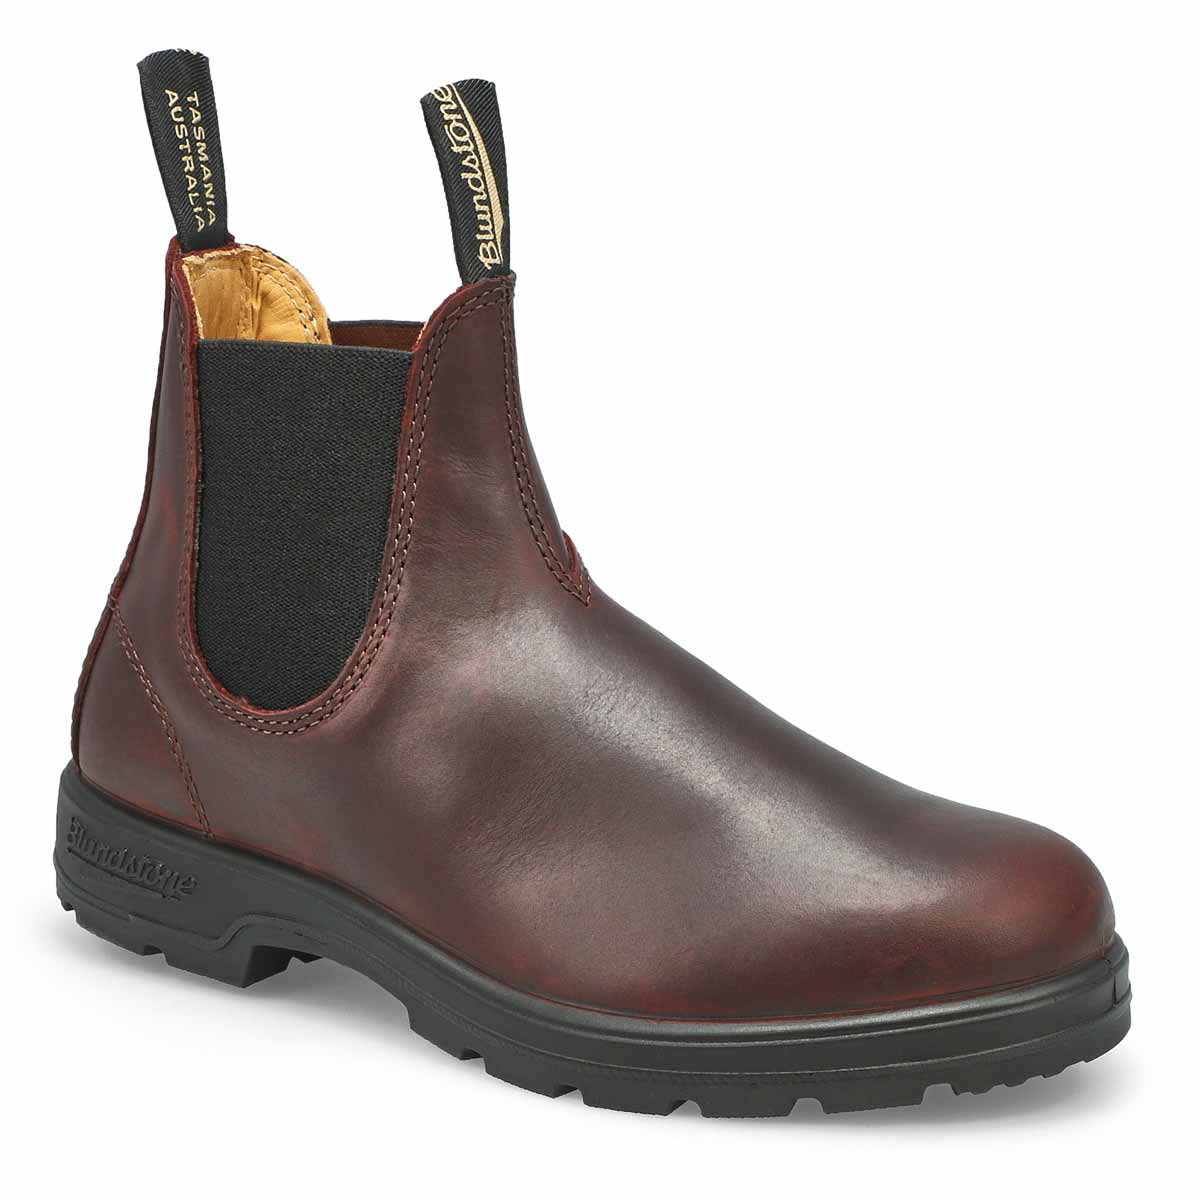 Unisex 2130 Leather Lined Boot - Auburn